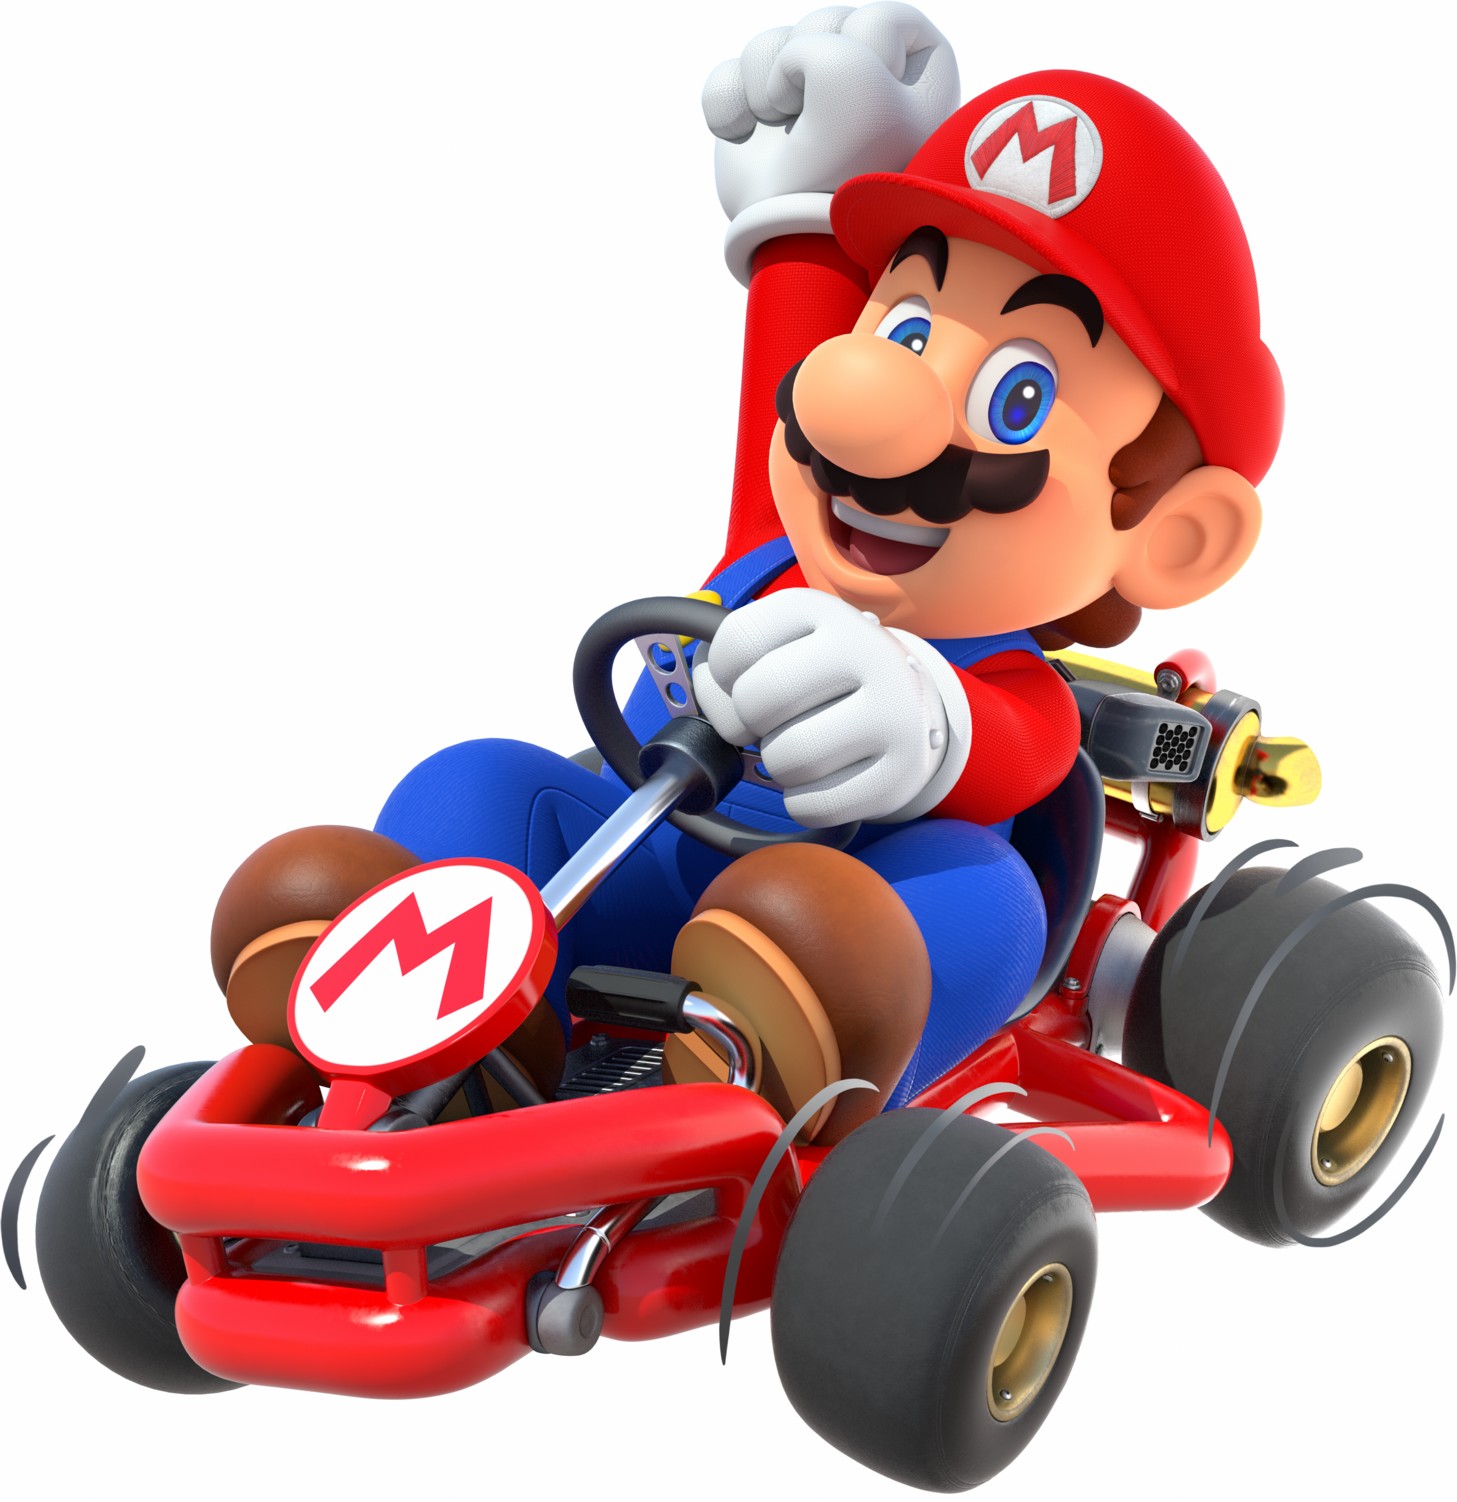 Detail Images Of Mario Kart Characters Nomer 35